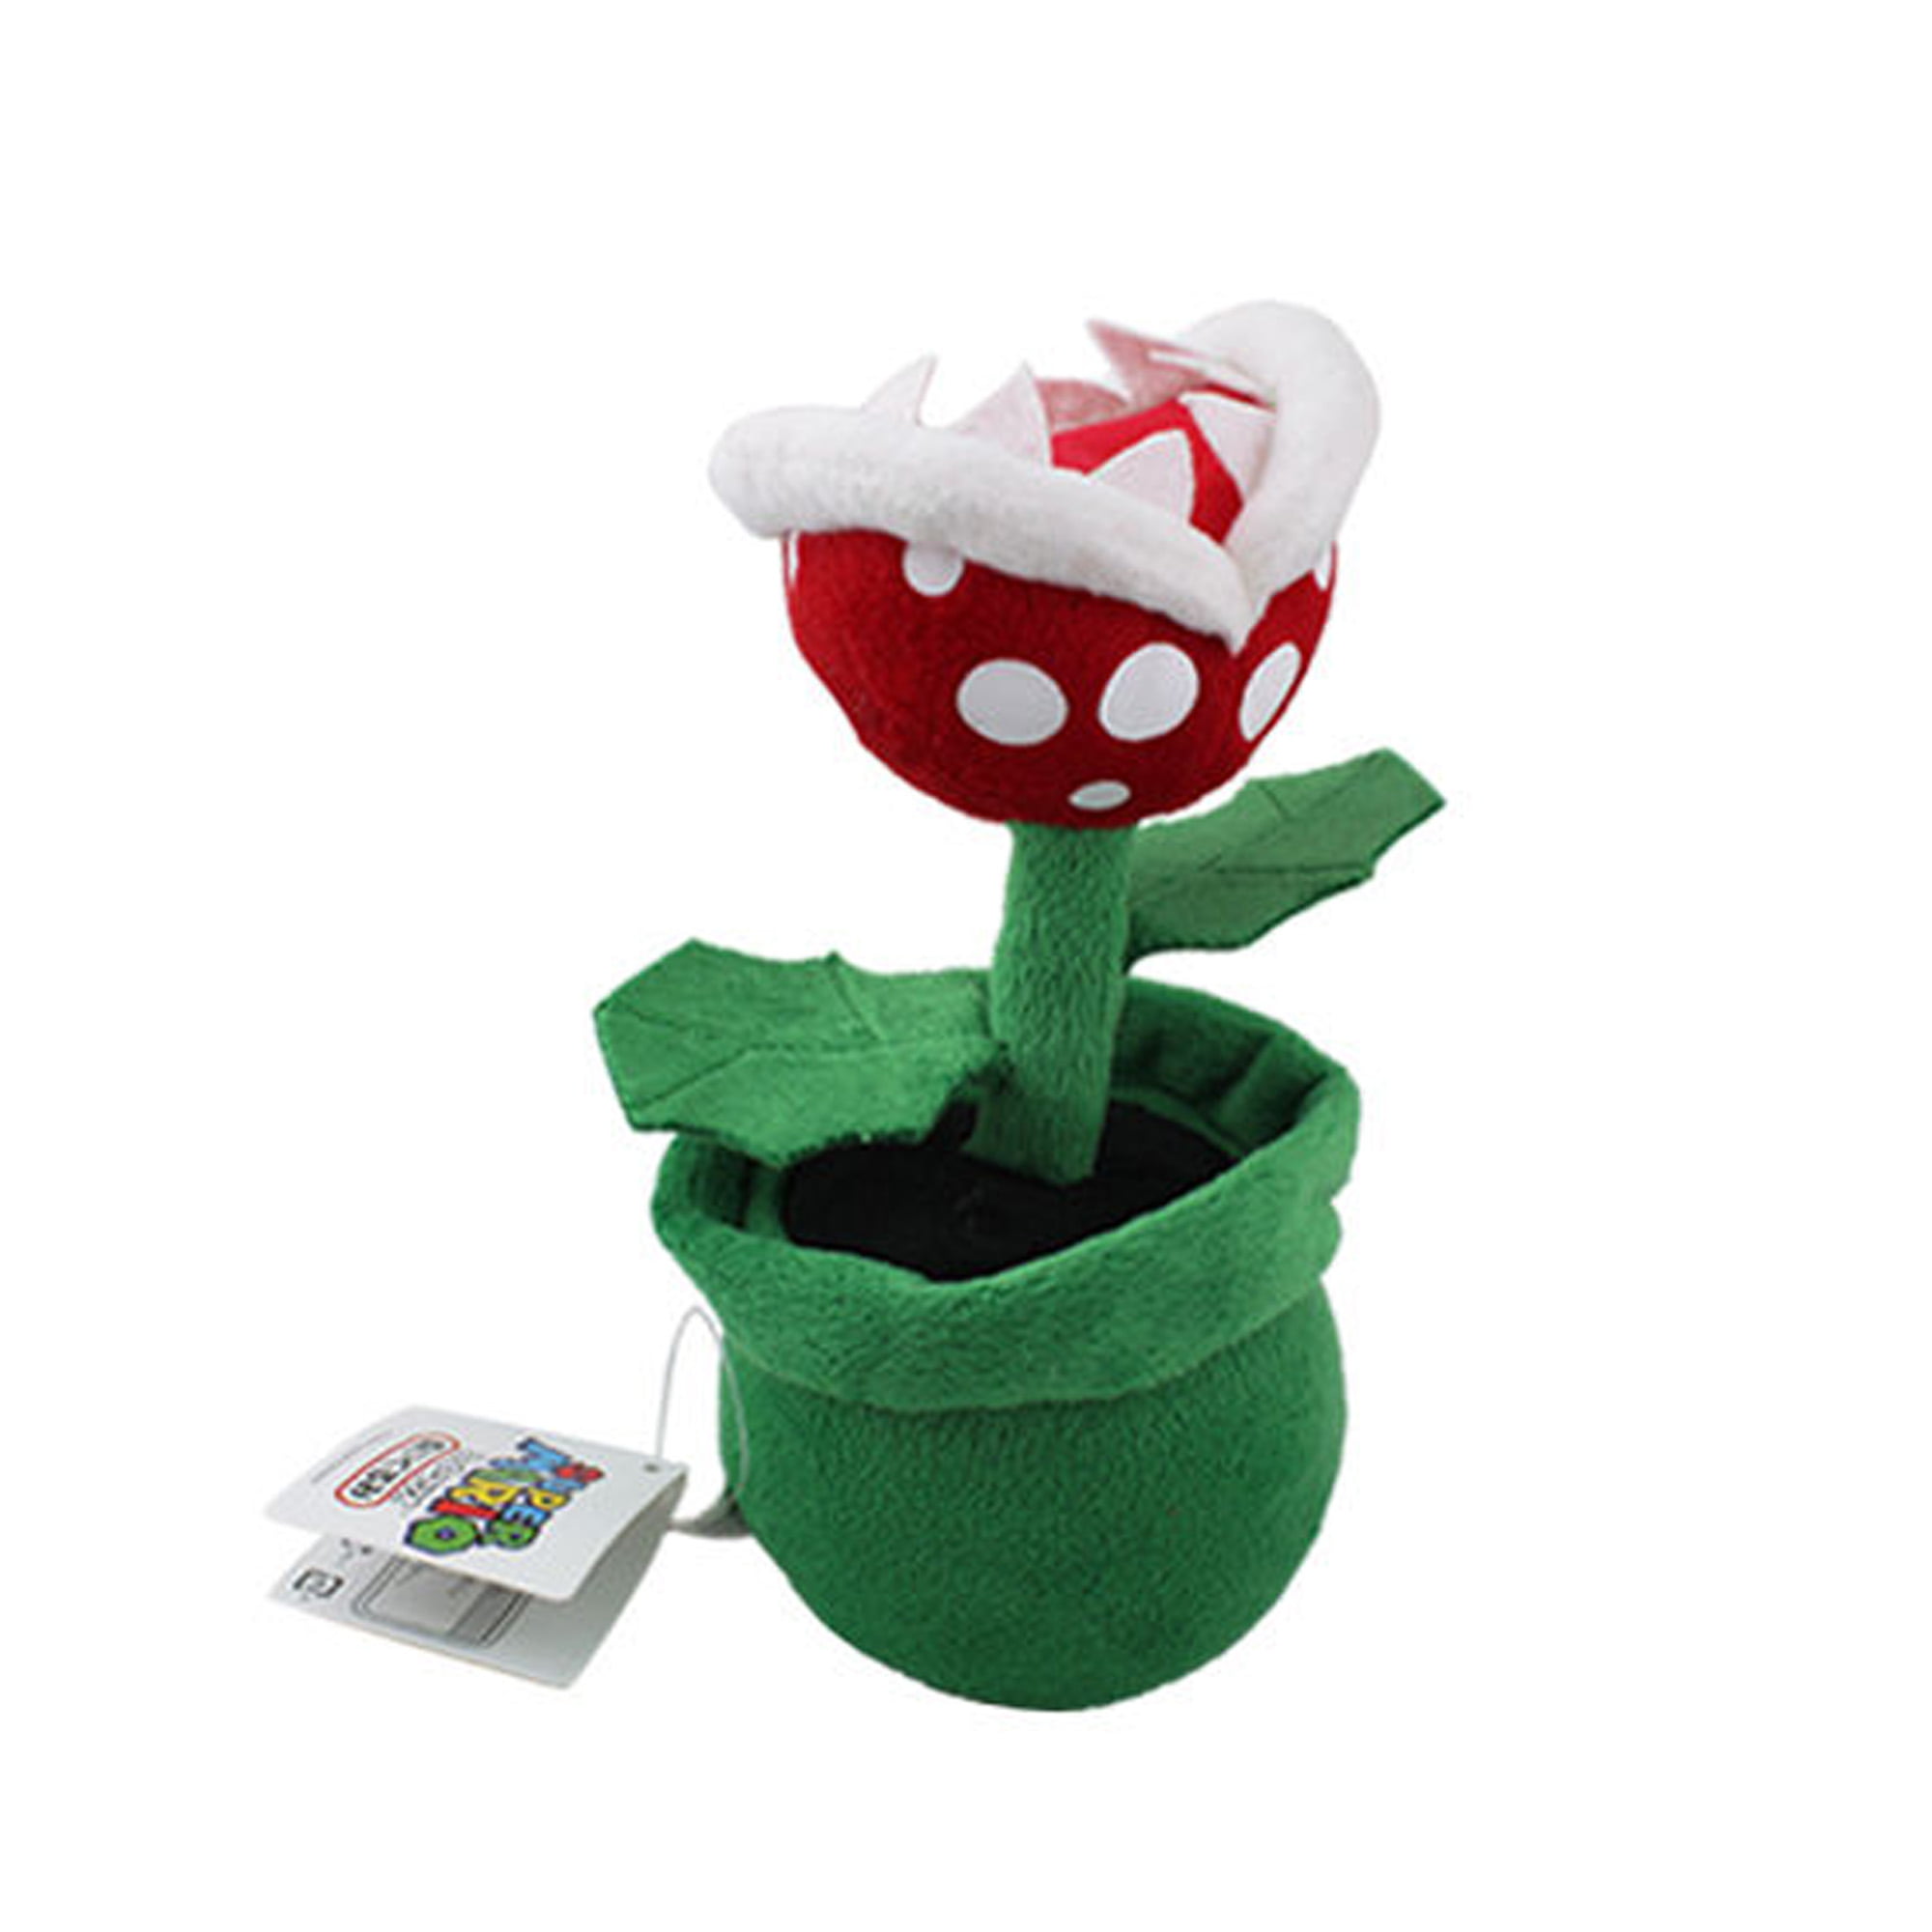 Piranha Plant Super Mario Bros Soft Plush Stuffed Doll Toy Figure Cuddly Gift